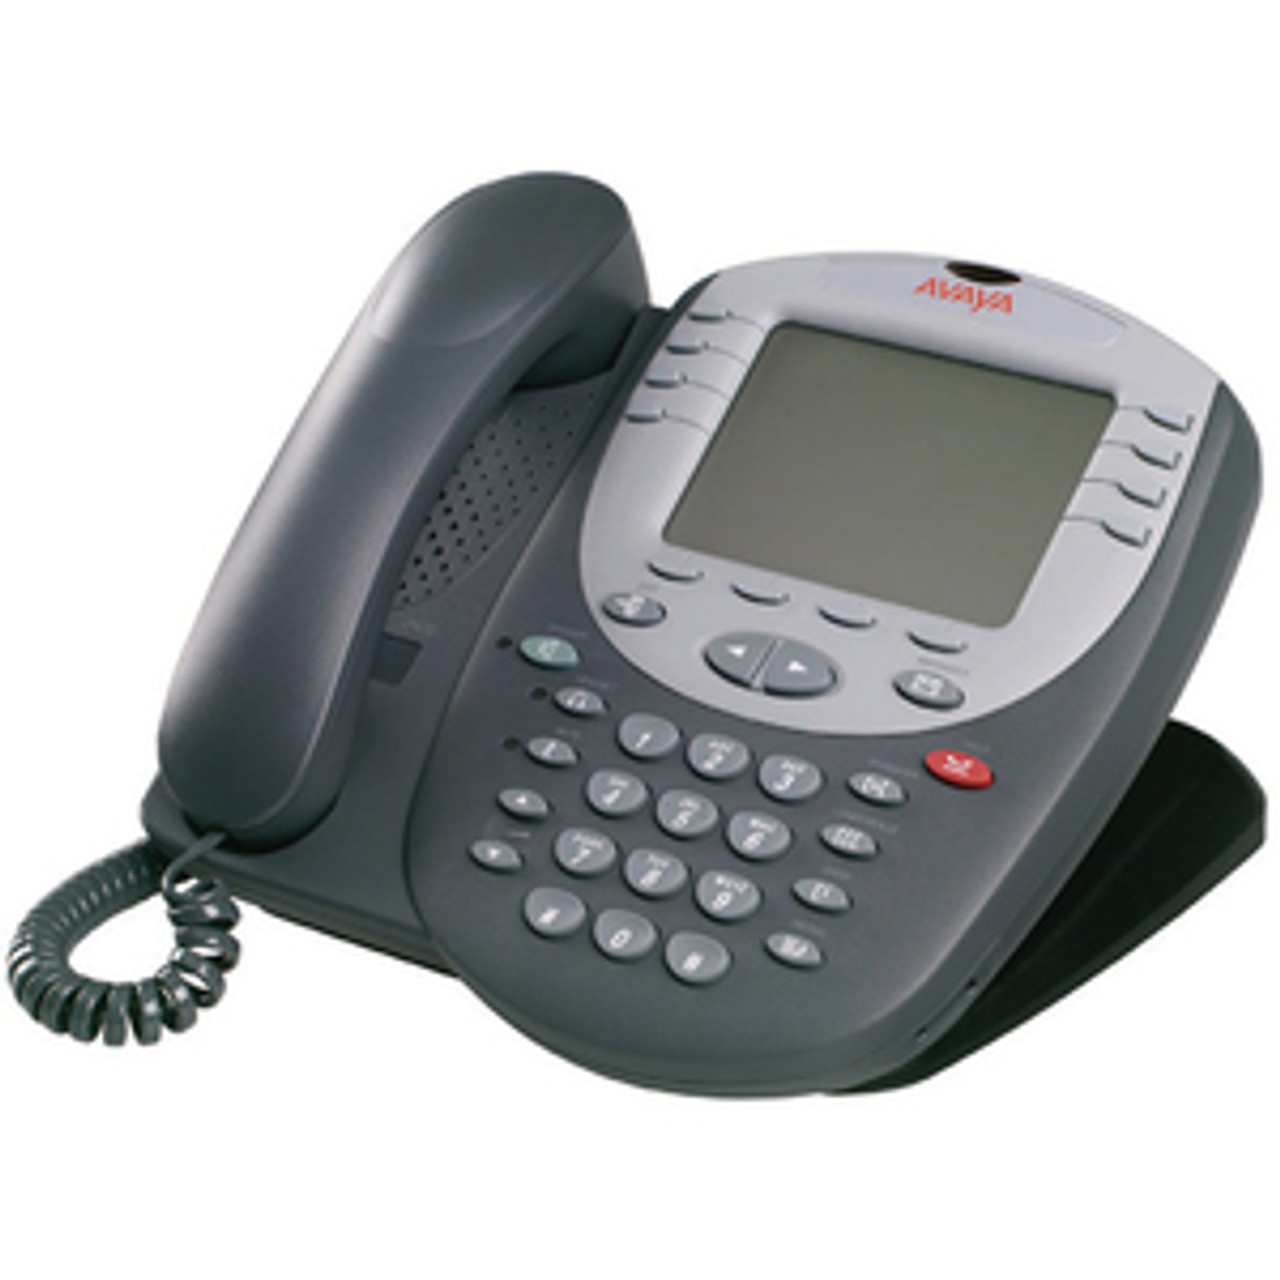 700381981 Avaya 5402 Standard Phone Dark Gray 1 x Phone Line Speakerphone (Refurbished)